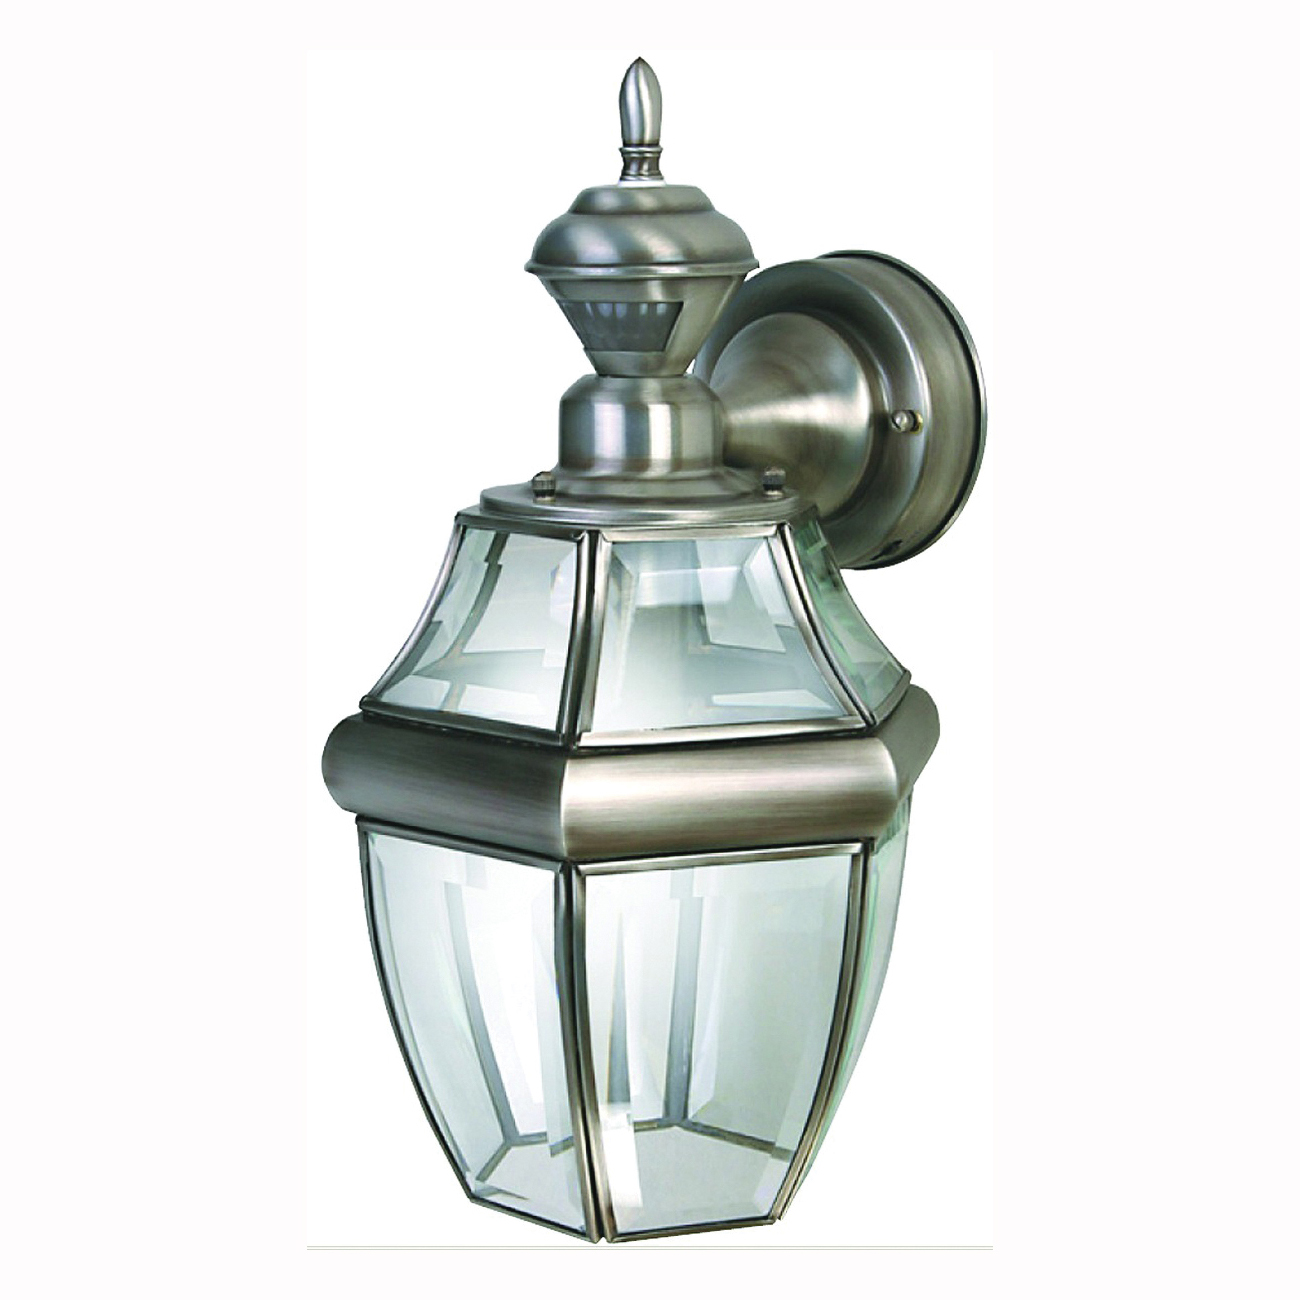 Dualbrite Series HZ-4166-SA Motion Activated Decorative Light, 120 V, 100 W, Incandescent Lamp